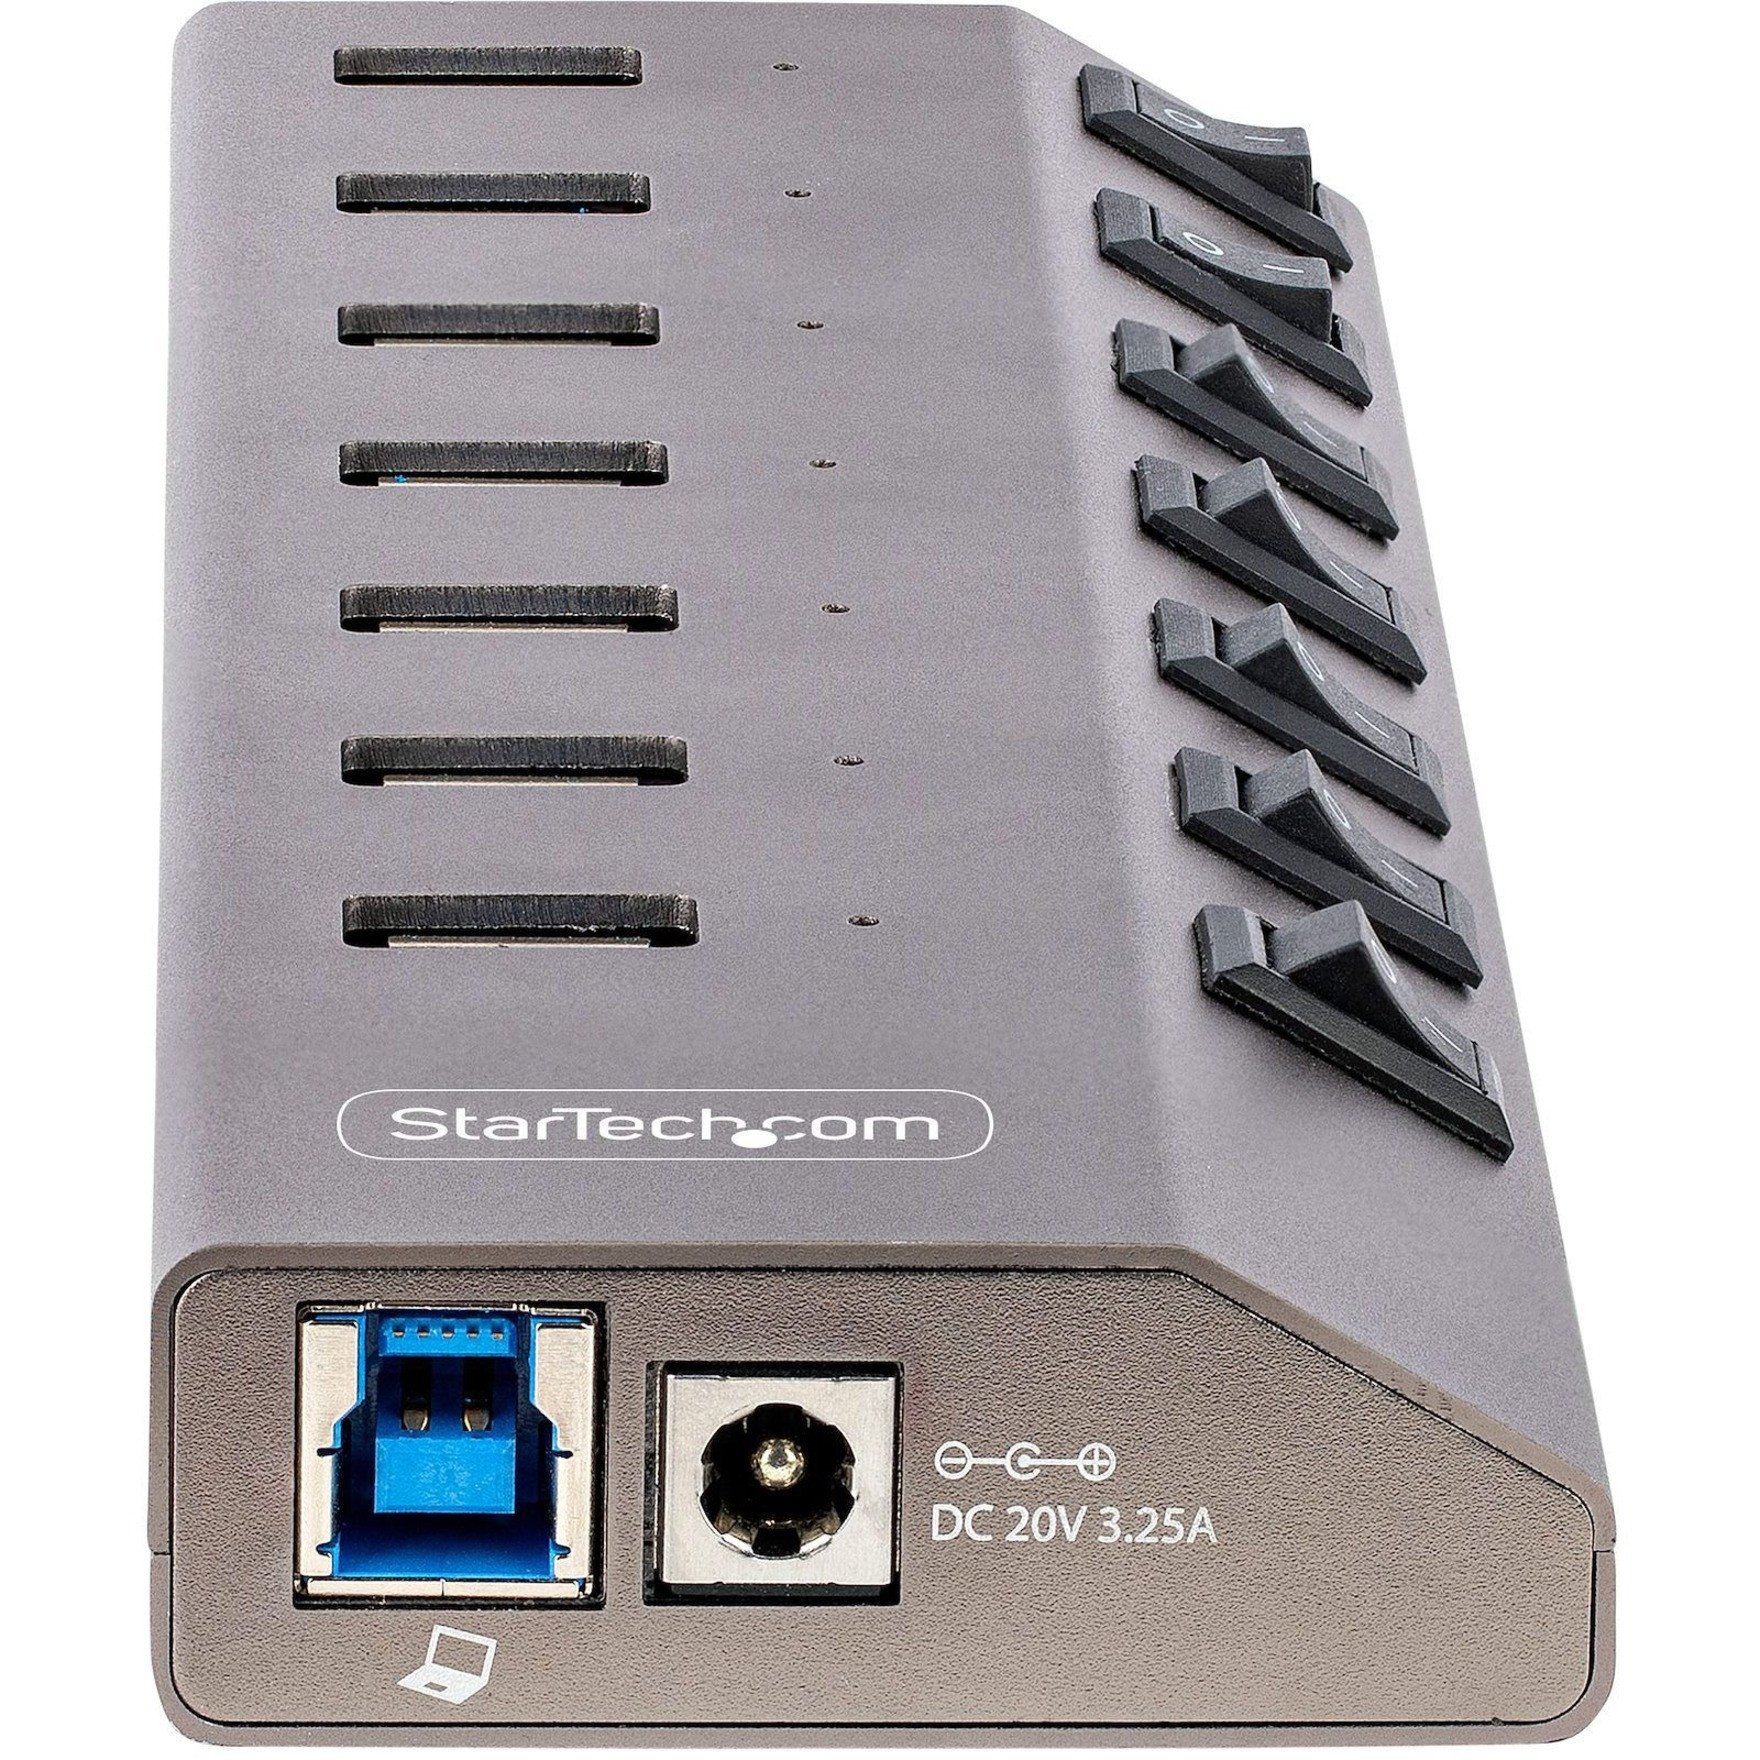 Startech .com 7-Port Self-Powered USB-C Hub with Individual On/Off